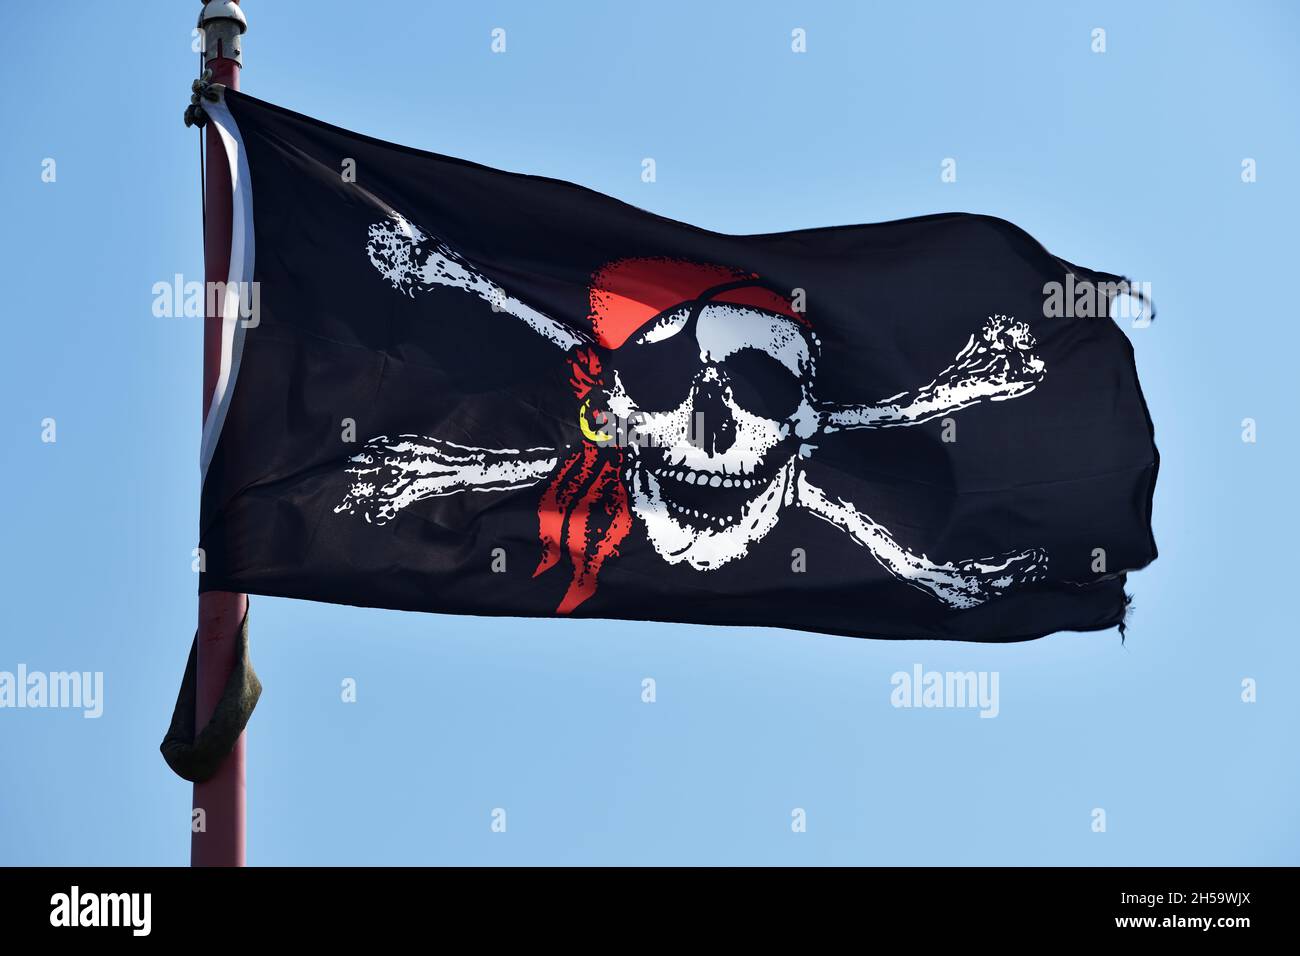 https://c8.alamy.com/comp/2H59WJX/wehende-piratenflagge-2H59WJX.jpg